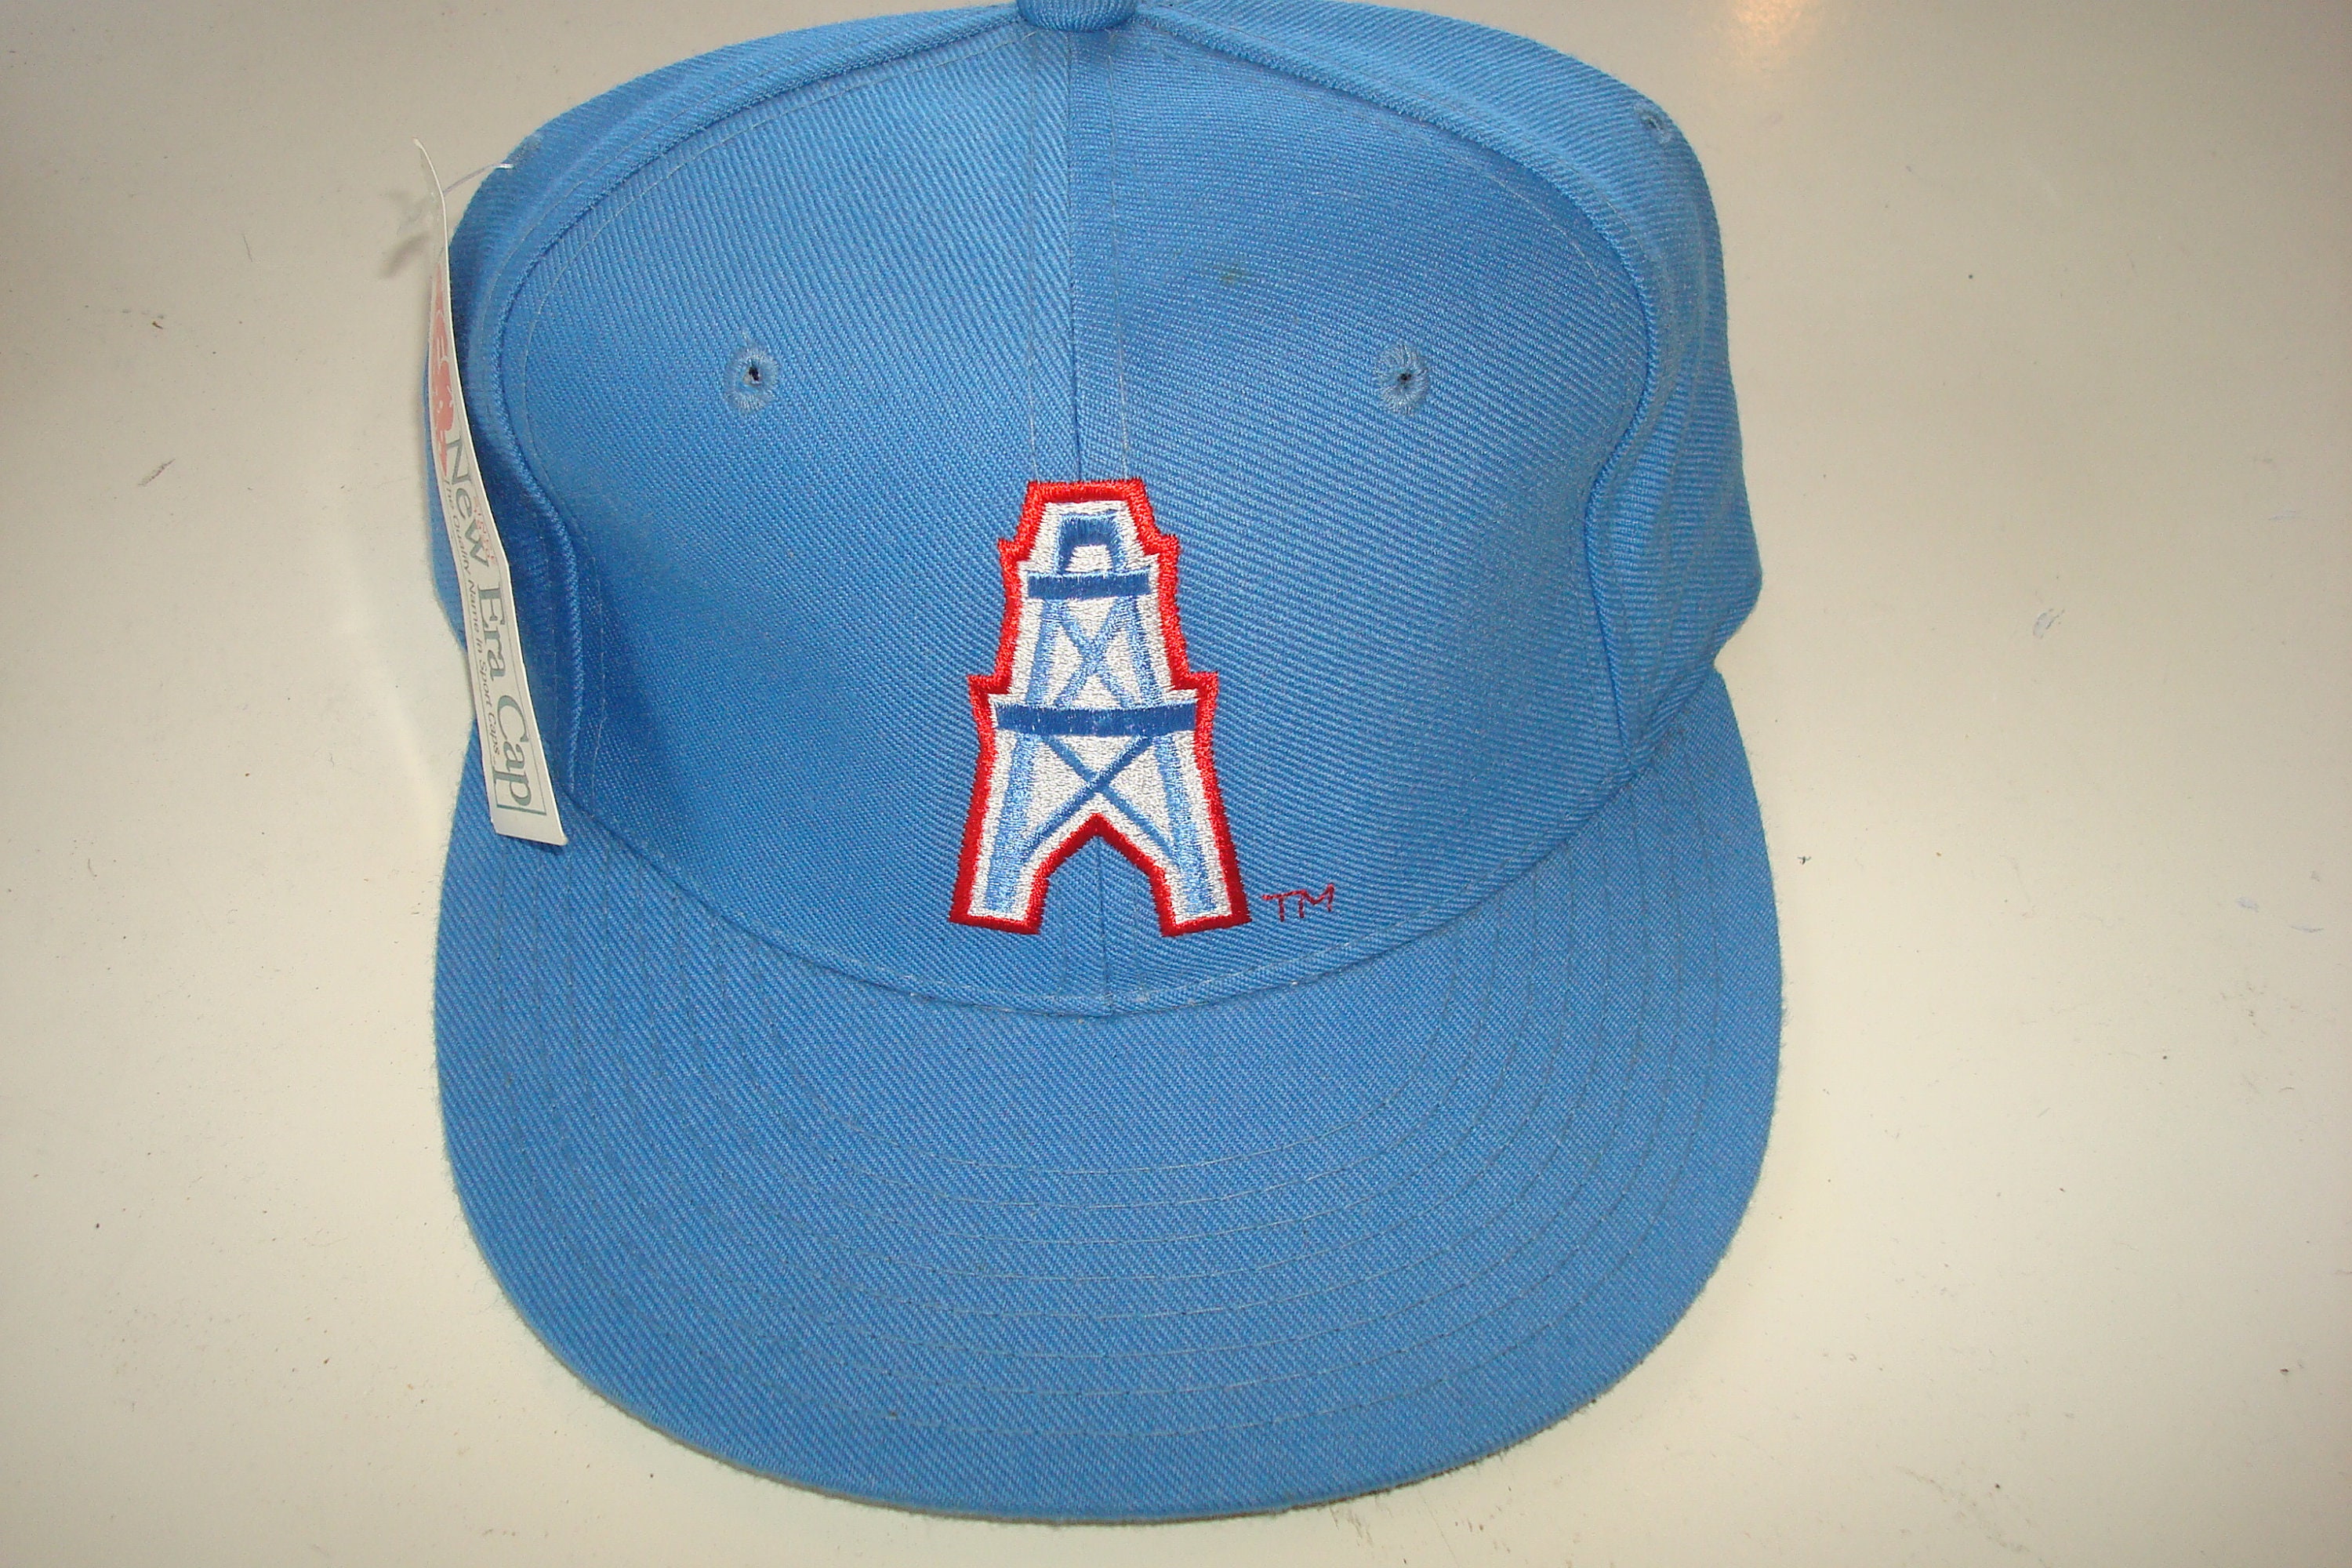 KTZ Houston Oilers Vintage Sharktooth 9fifty Cap in Blue for Men